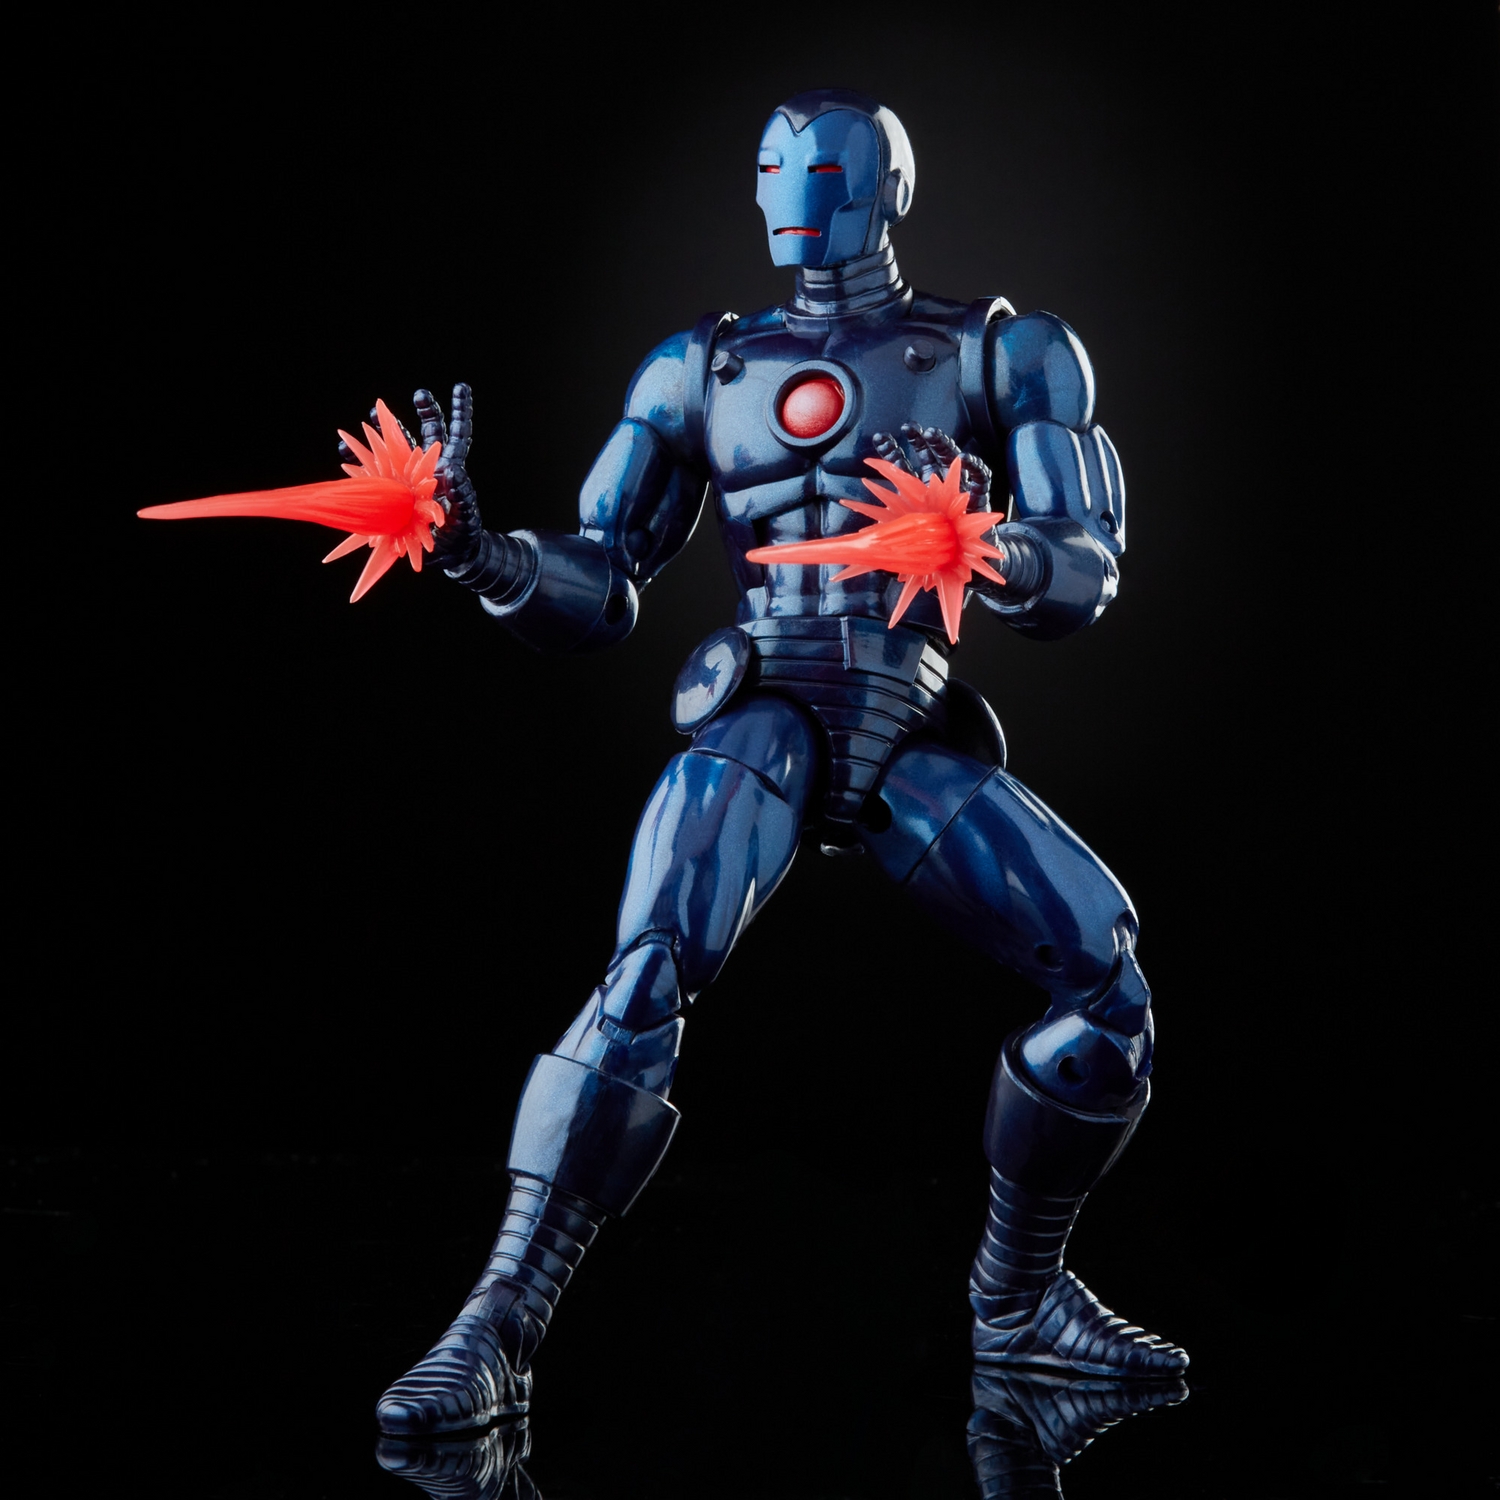 MARVEL LEGENDS SERIES 6-INCH IRON MAN Figure Assortment - Stealth Iron Man - oop (8).jpg